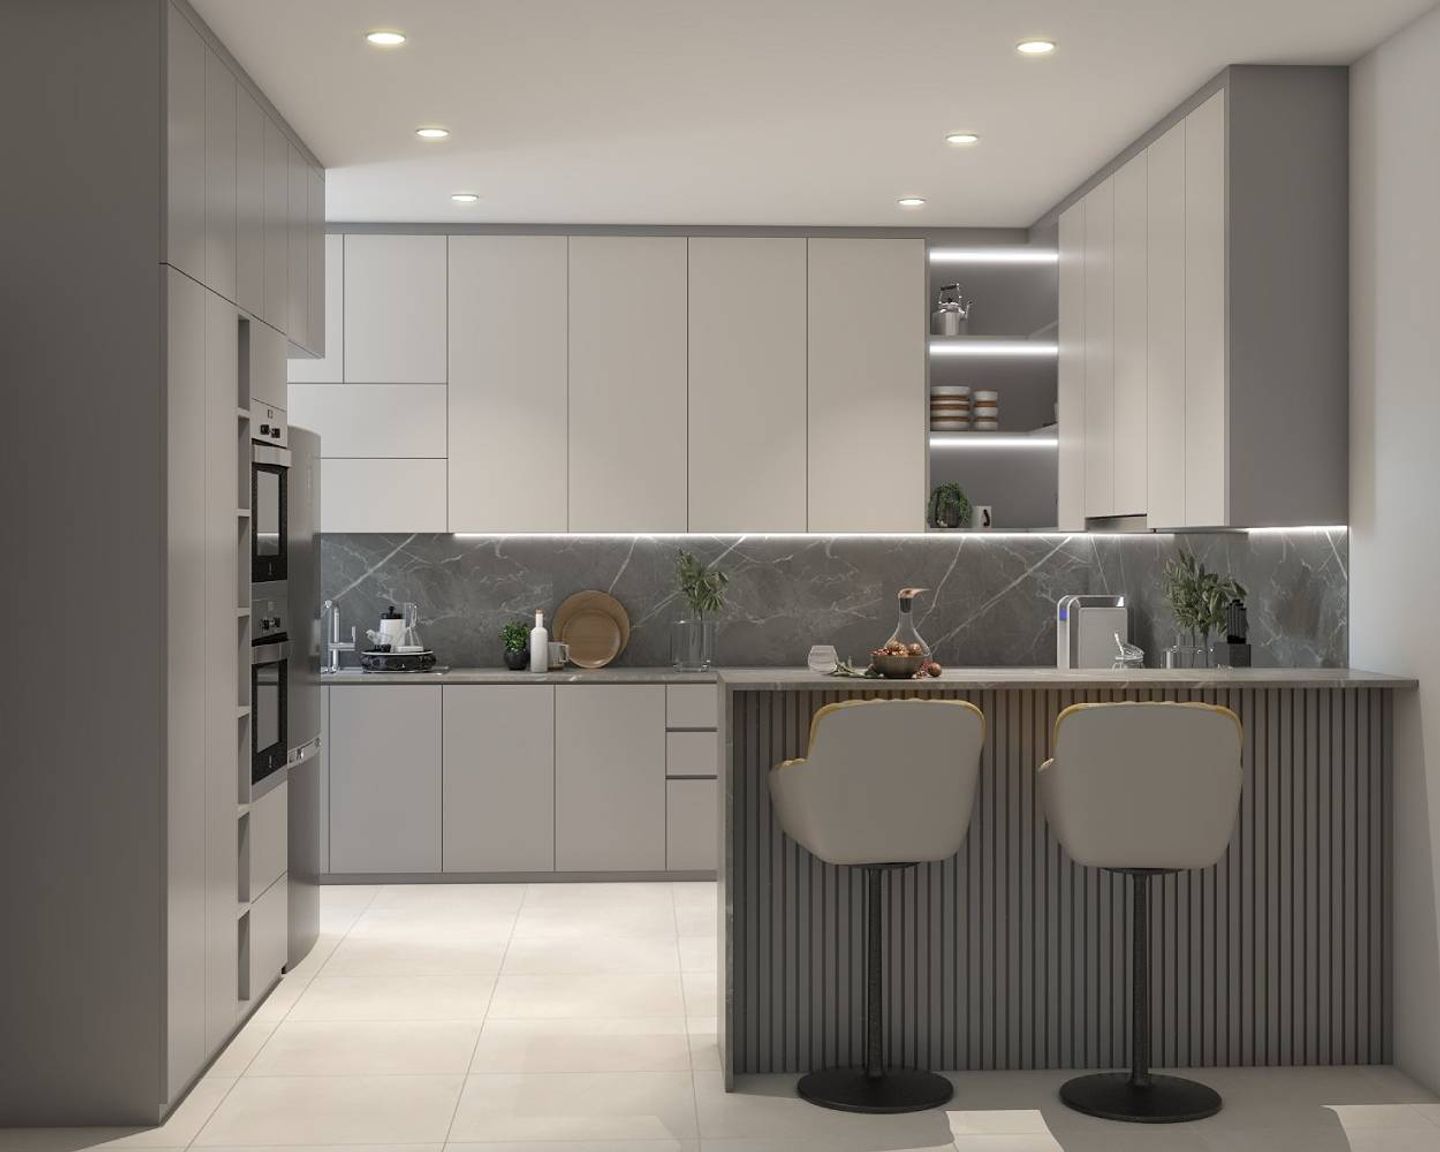 22 m² Grey And White Peninsula Kitchen Design With Profile Lighting | Livspace